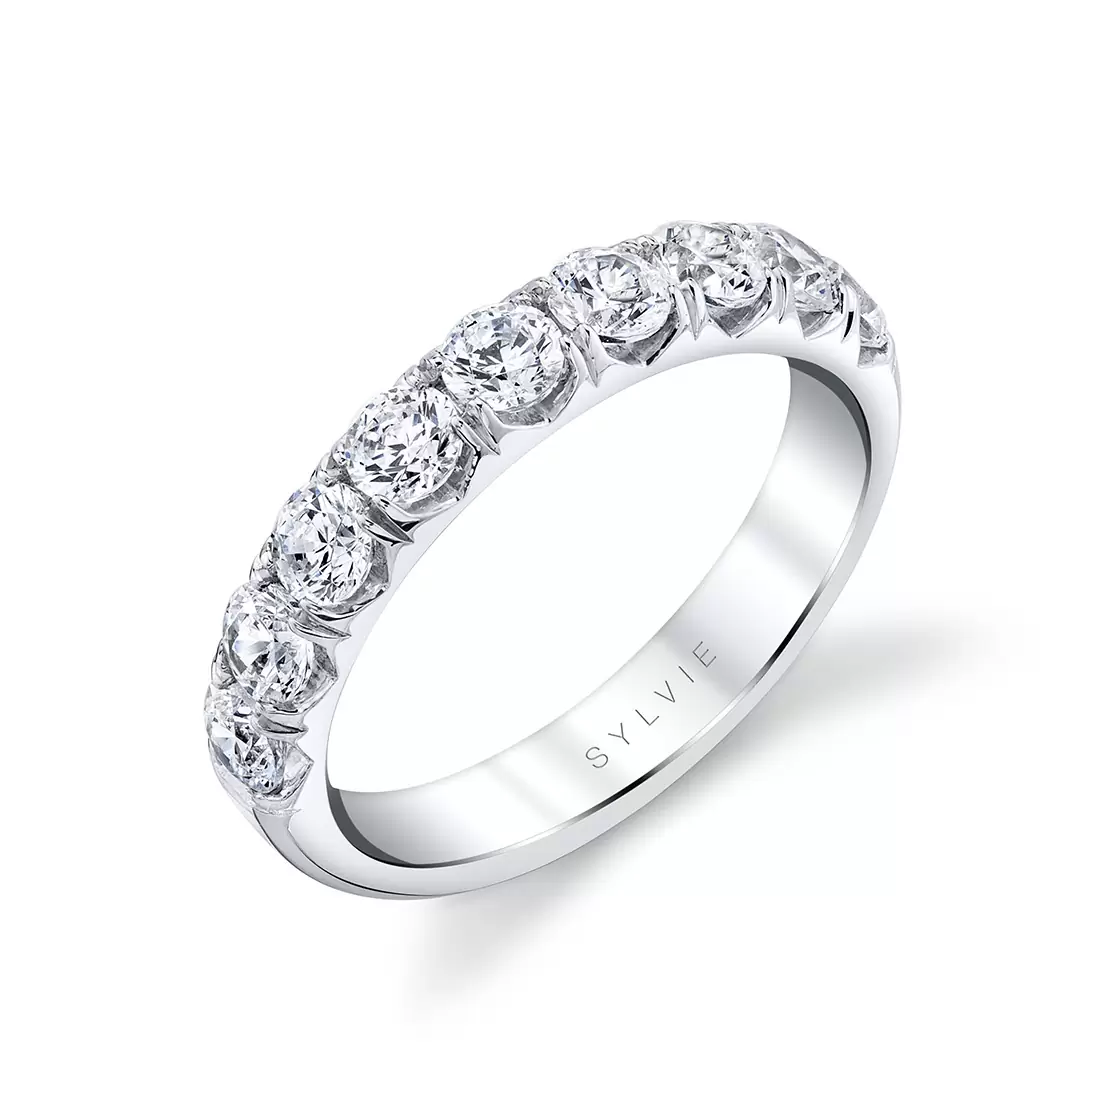 White gold, thick classic diamond wedding ring